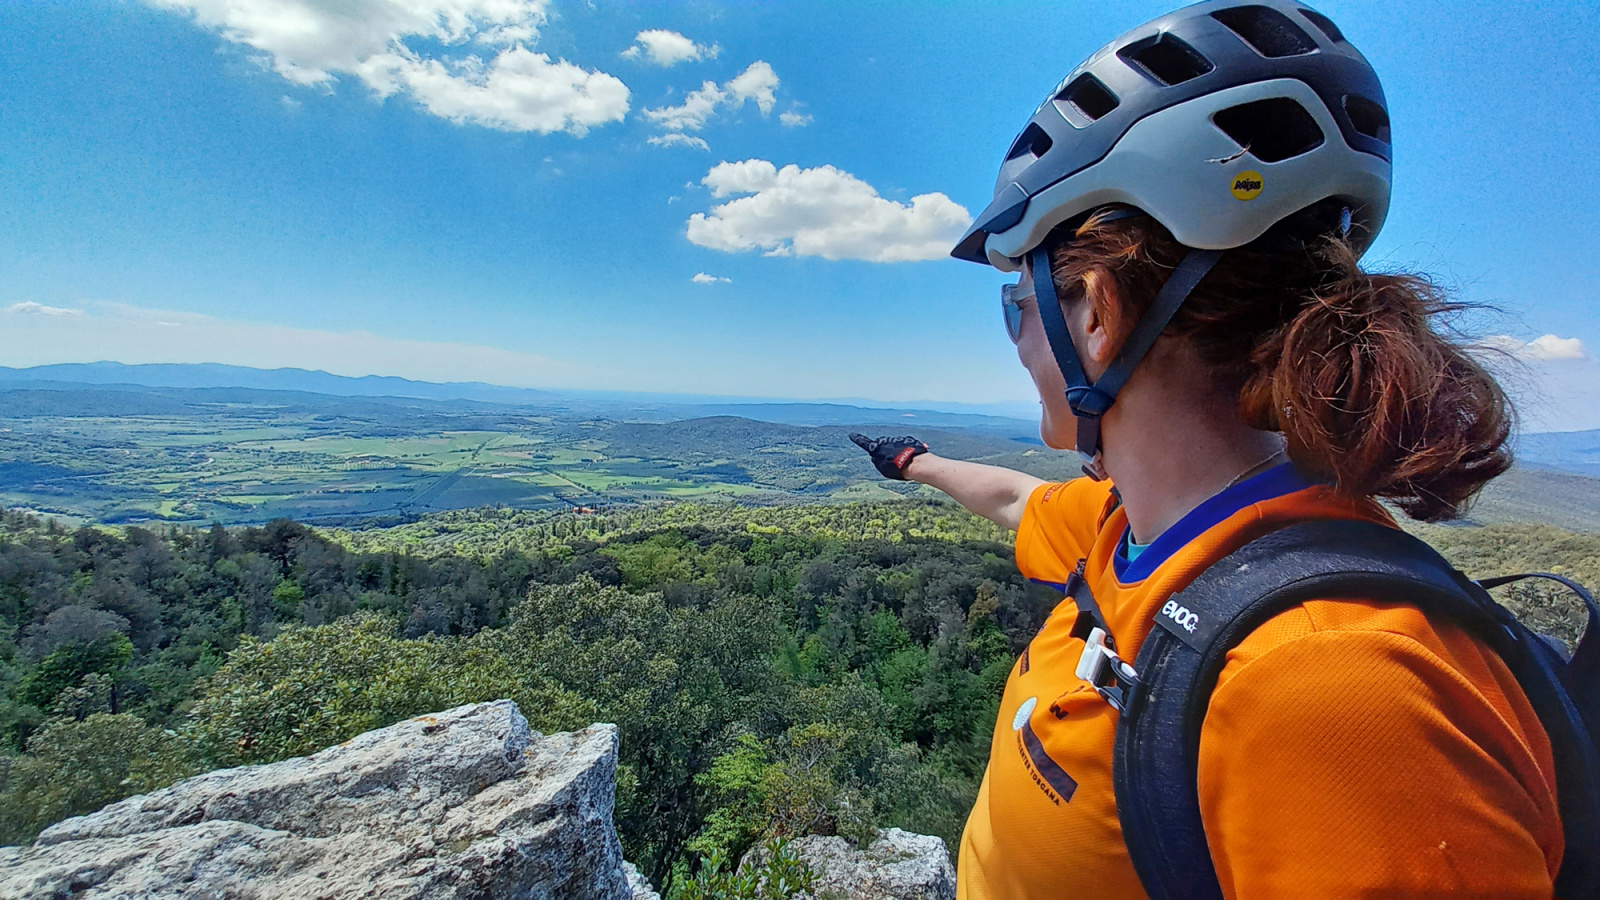 Bikeferien in der Toscana - 2023 Woche 18 - Petra, Carla & Michael